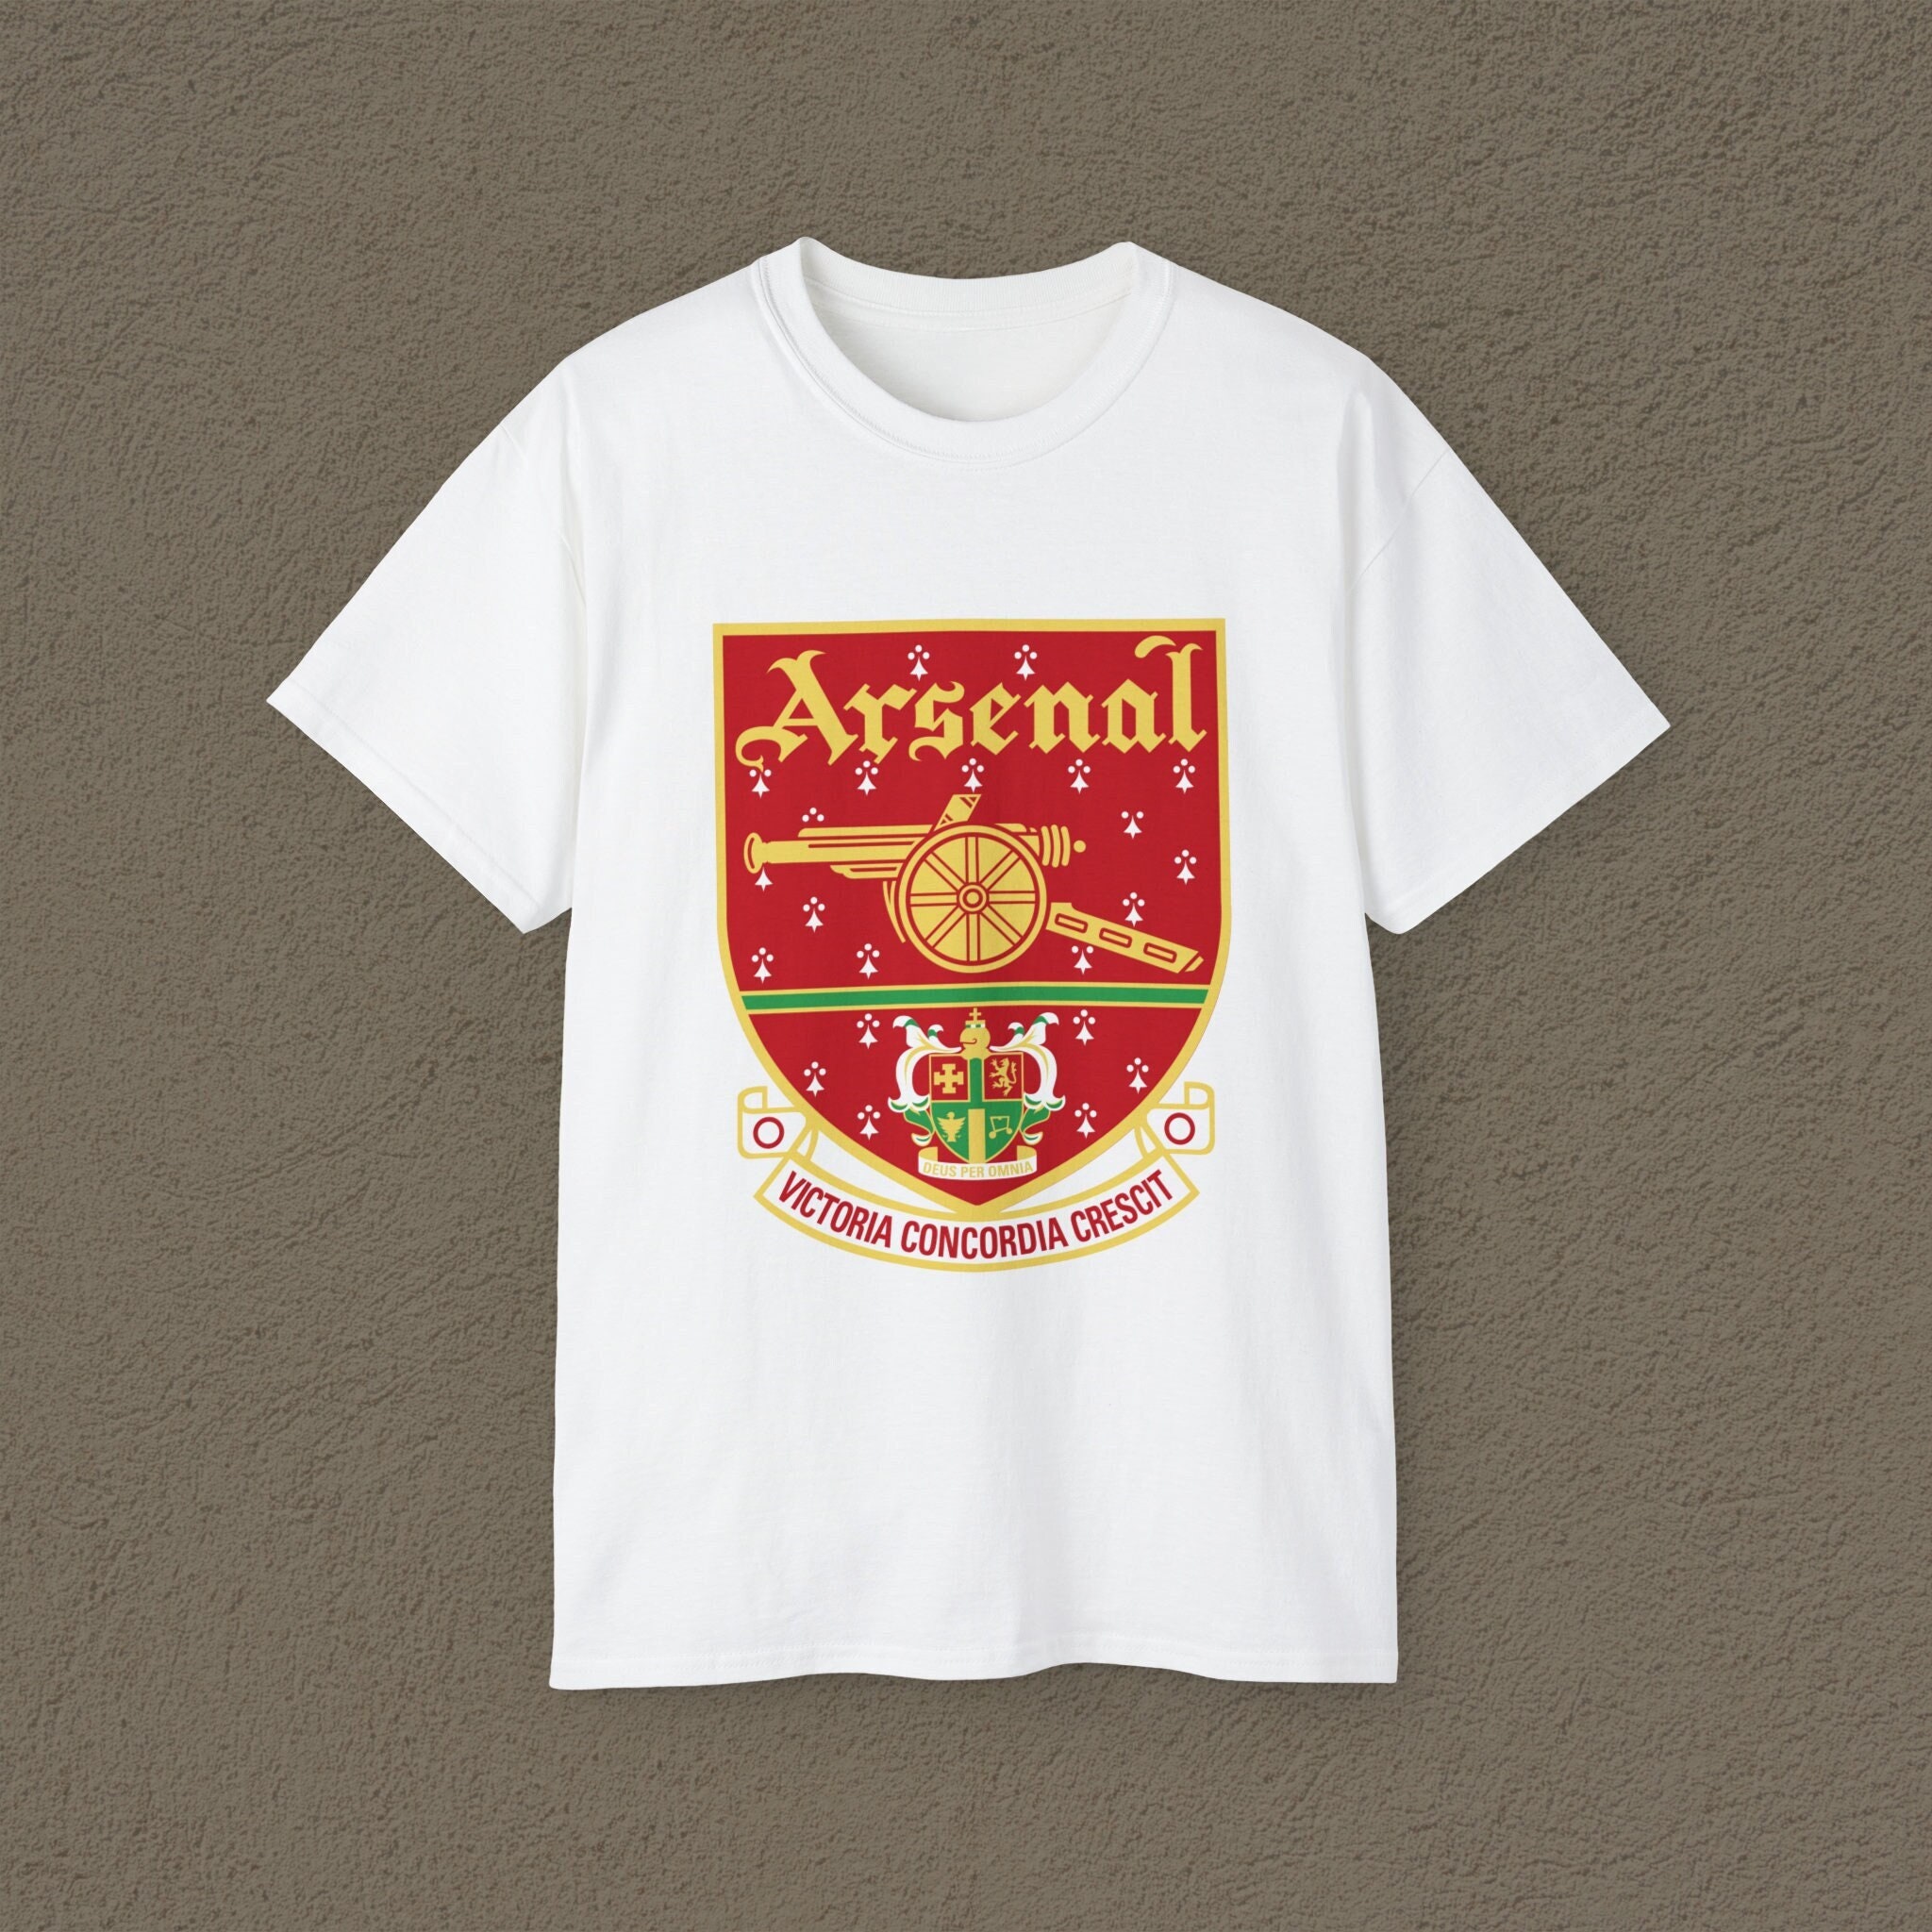 Classic and Retro Arsenal Football Shirts � Vintage Football Shirts